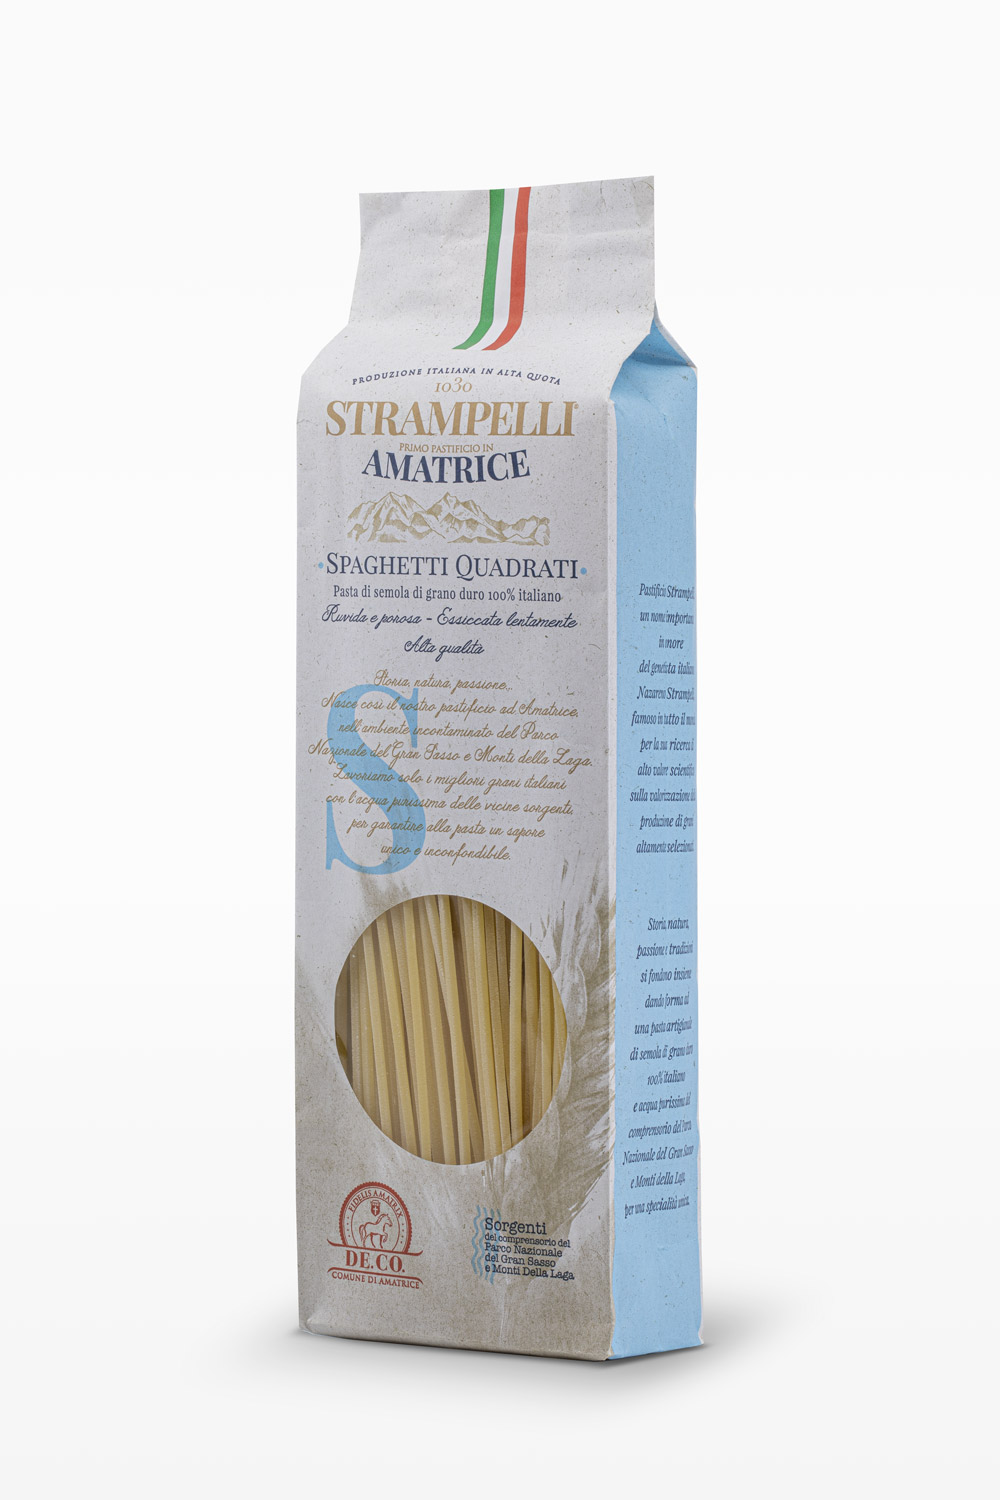 Spaghetti quadrati - Durum wheat semolina pasta, rough and porous, 100% Italian wheat, slow drying at low temperature.